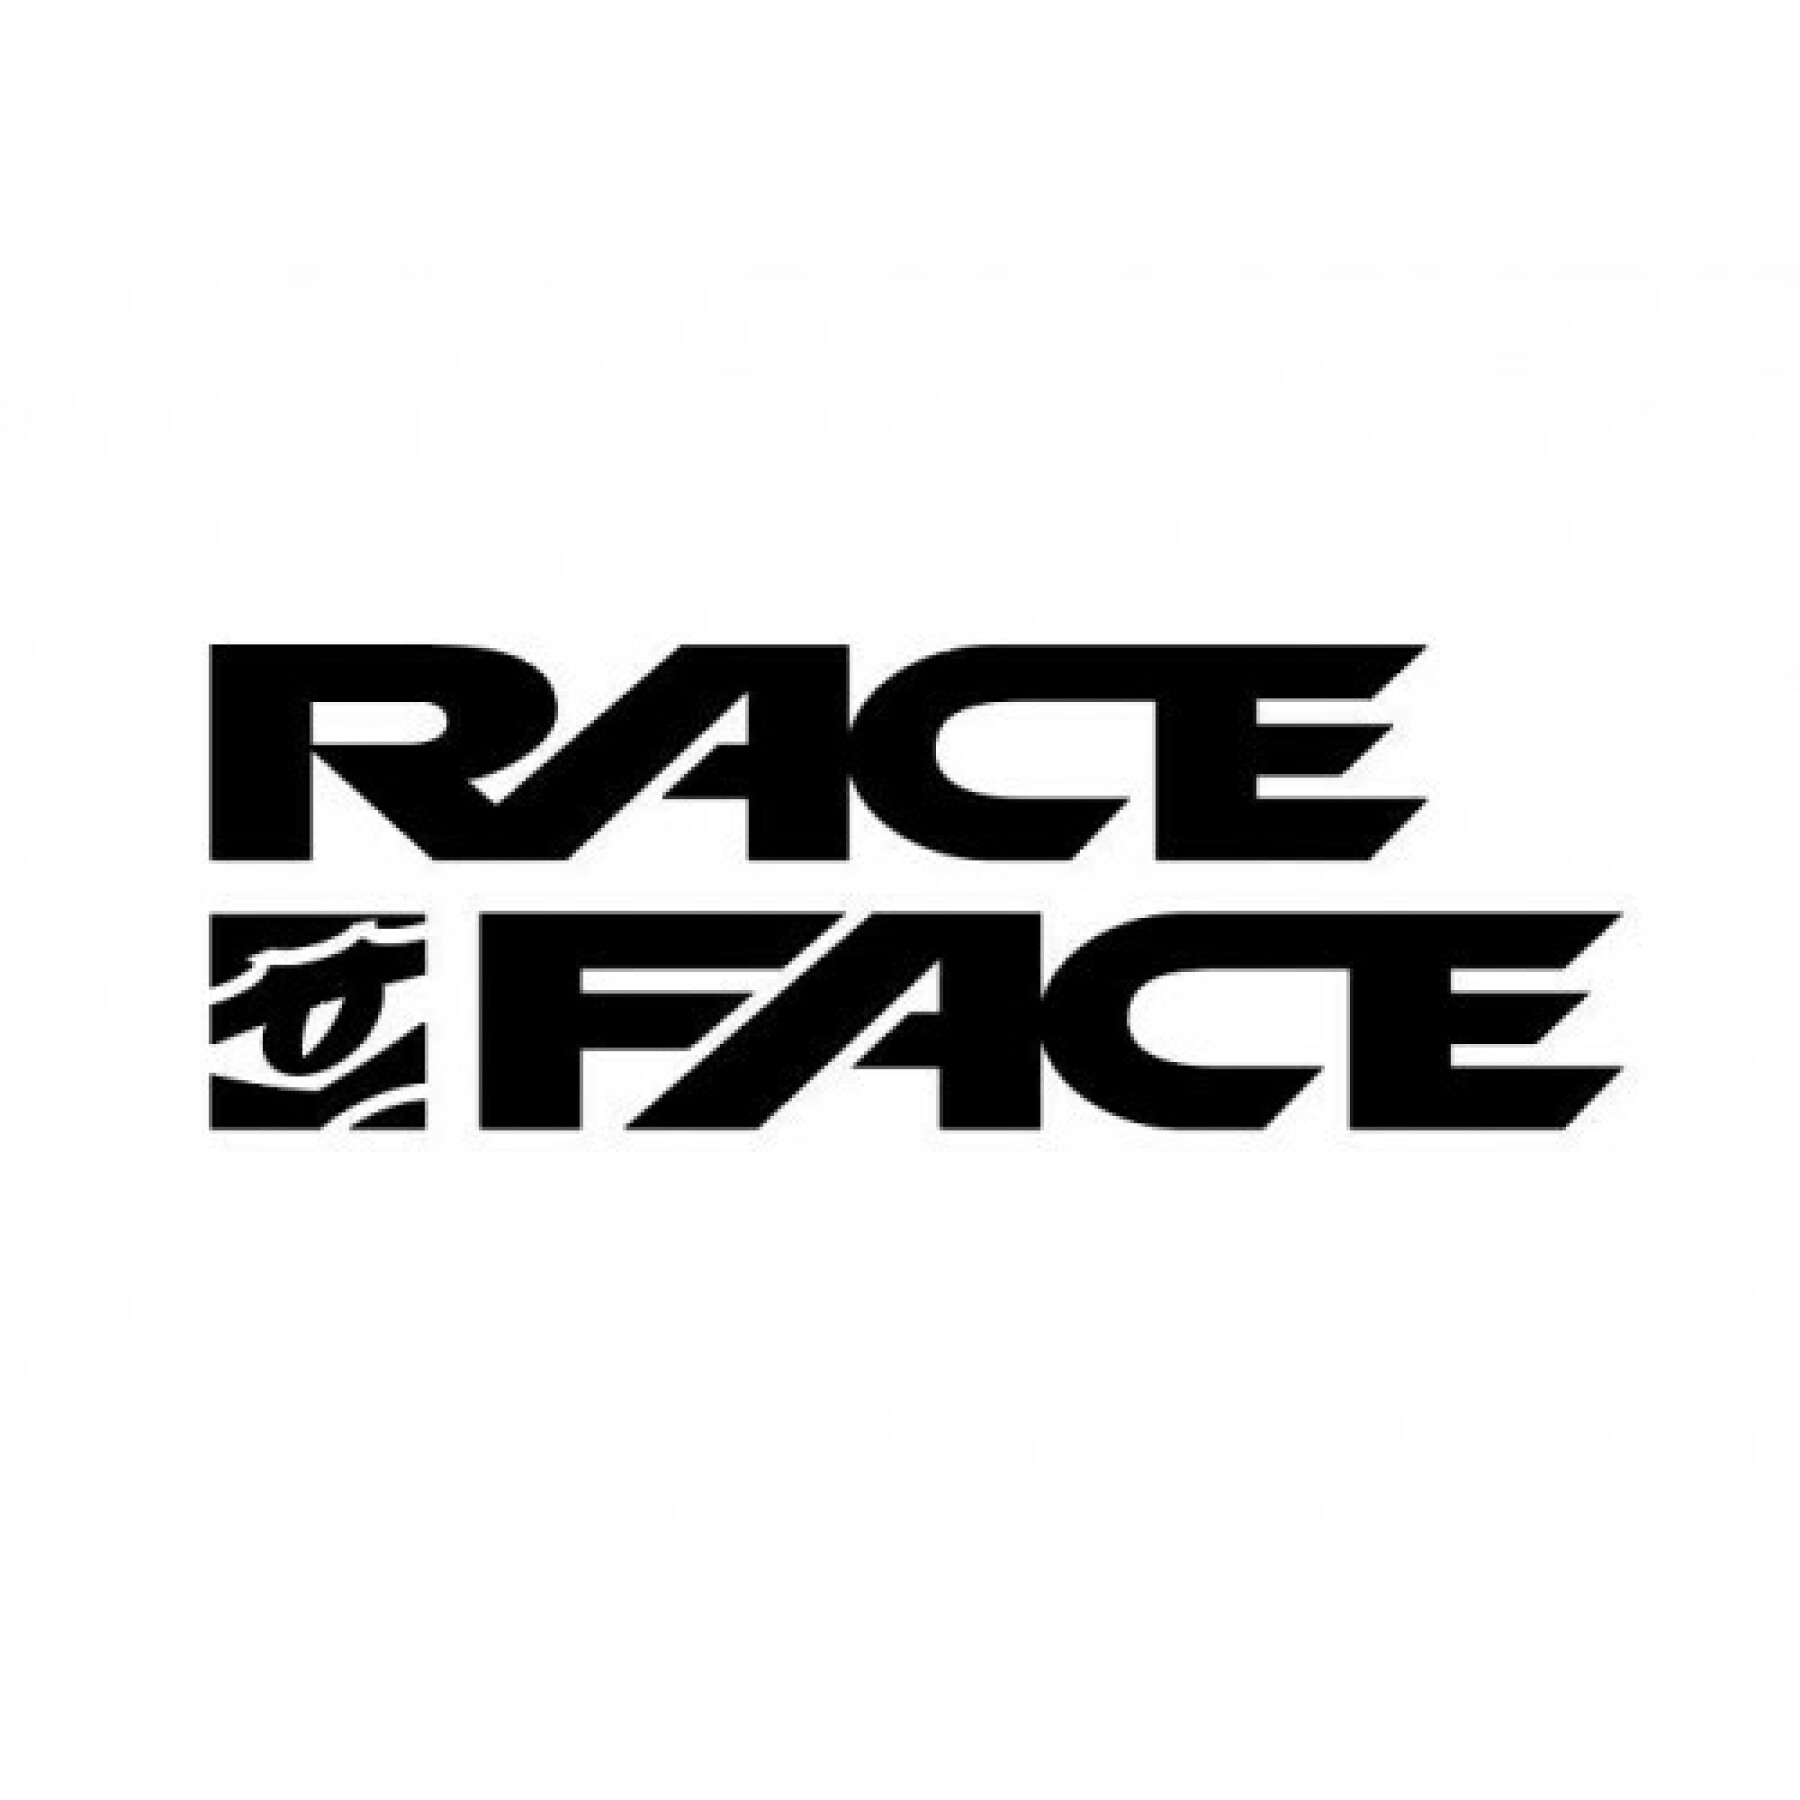 Felge Race Face arc offset - 35 - 27.5 - 32t